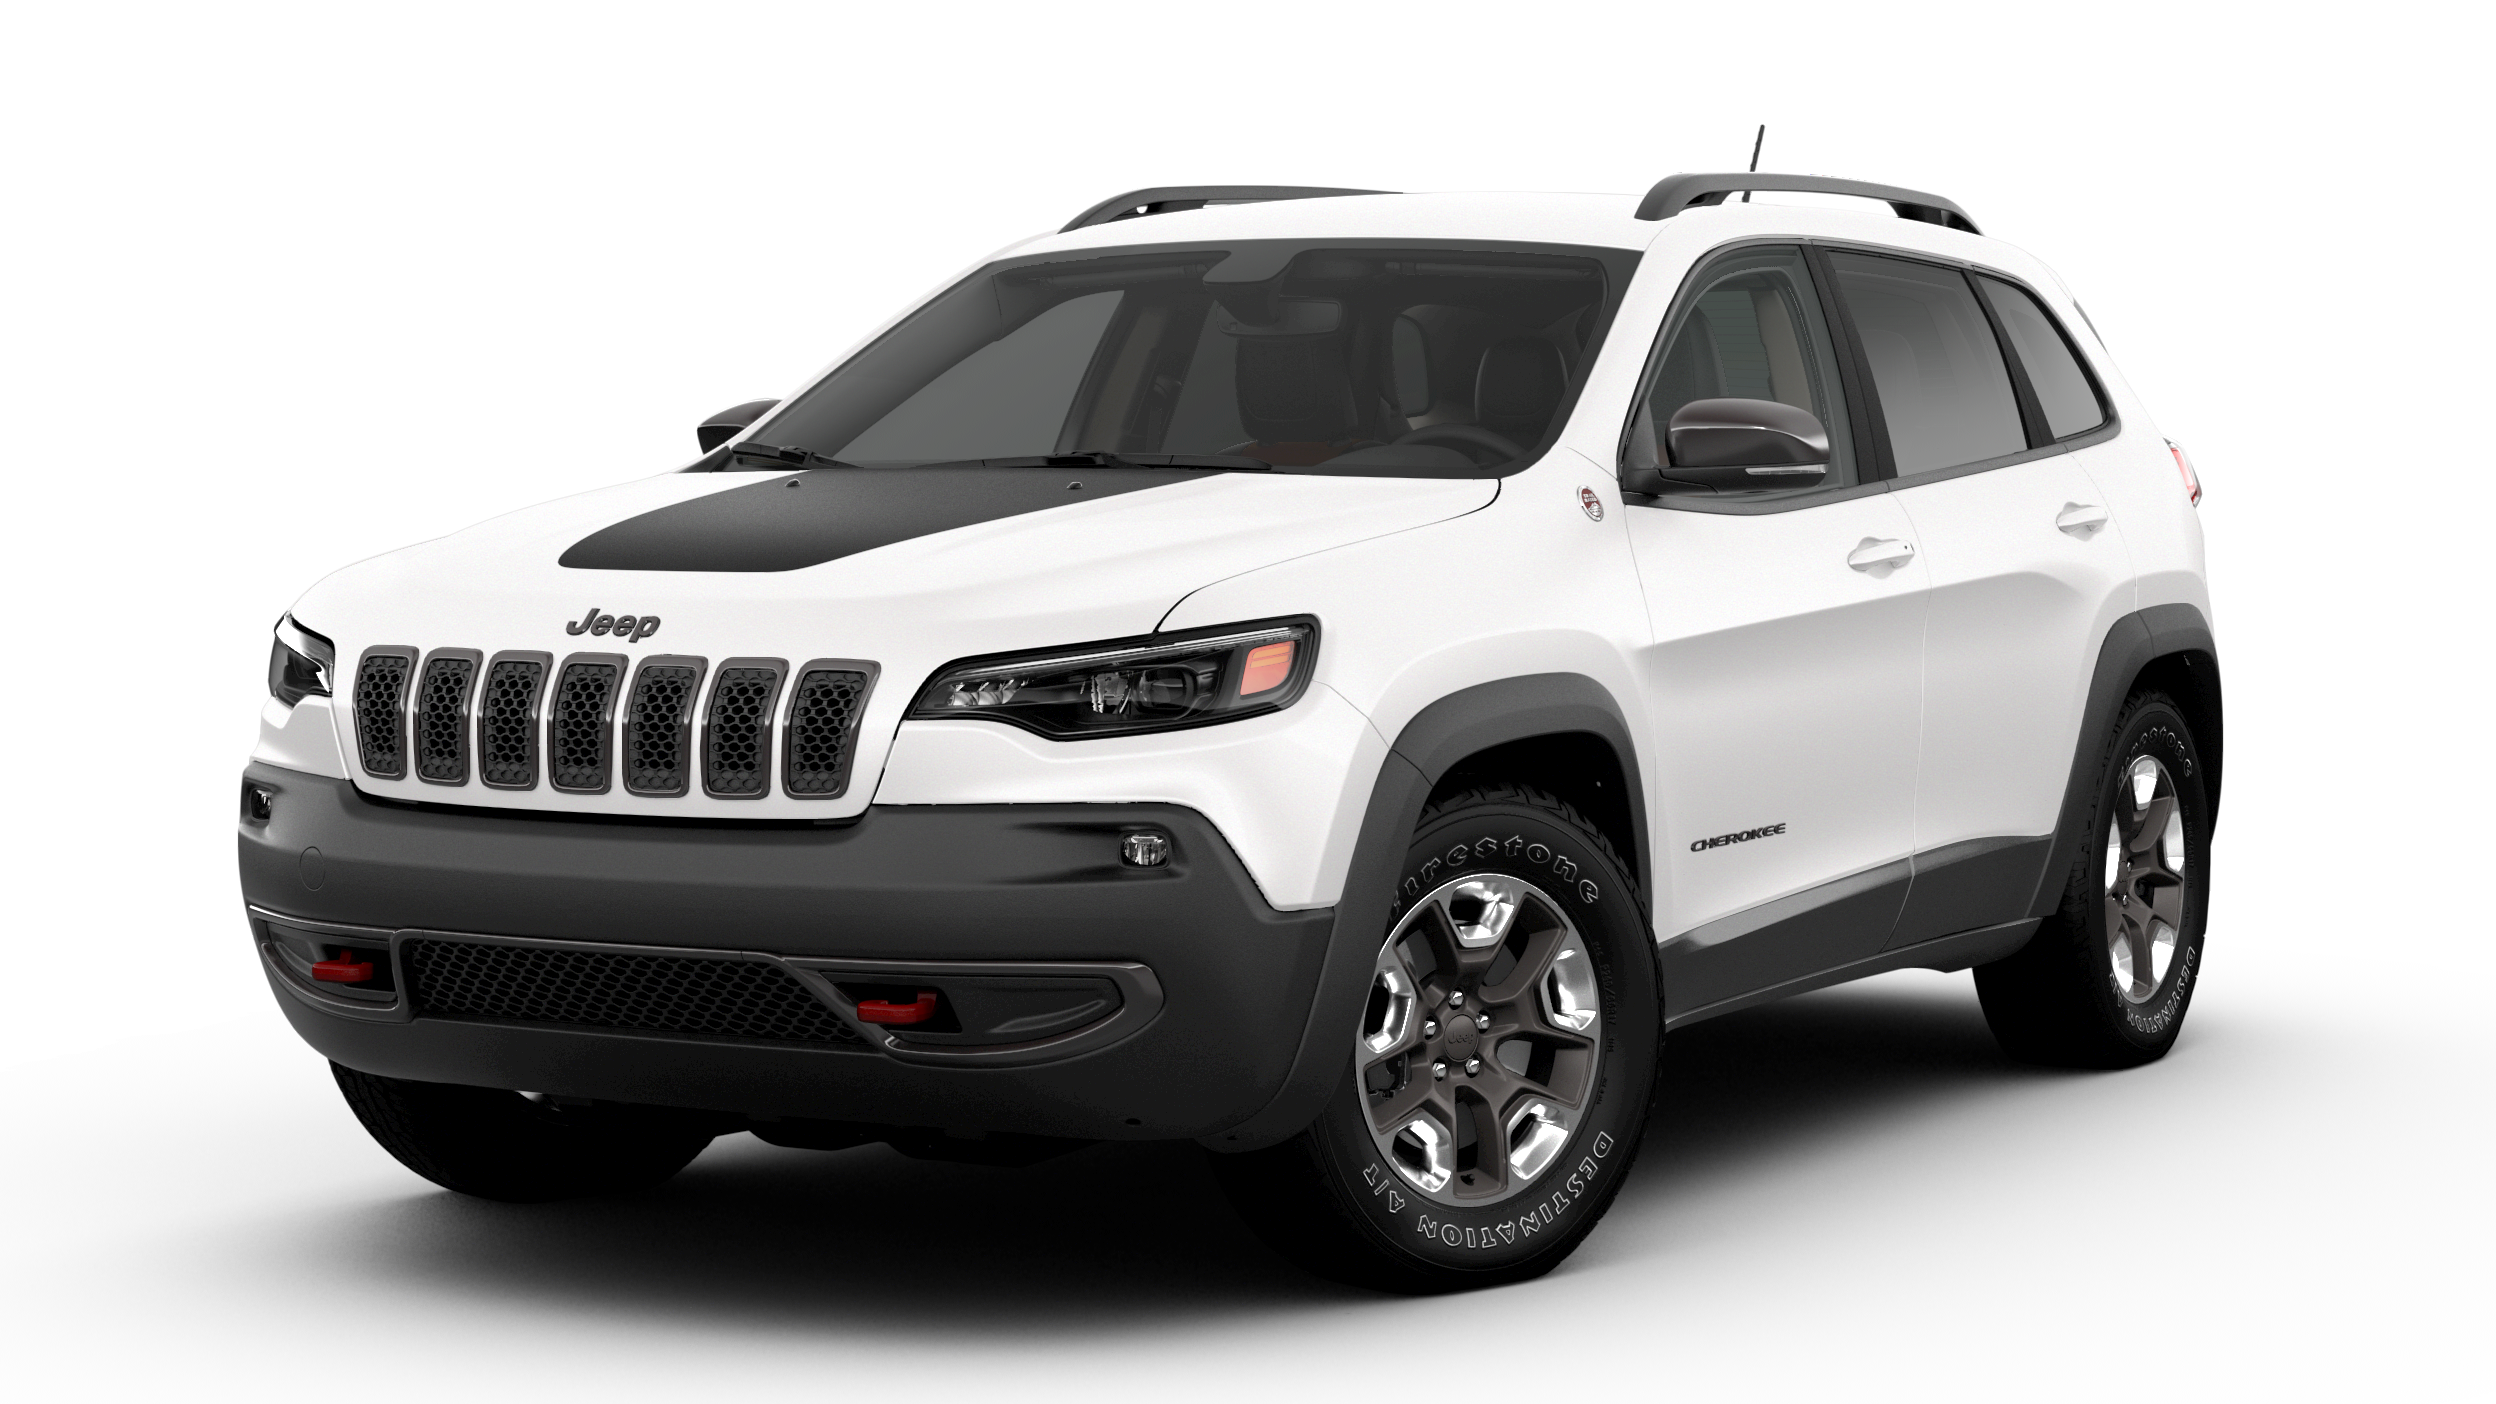 2019 Jeep Cherokee Configurations